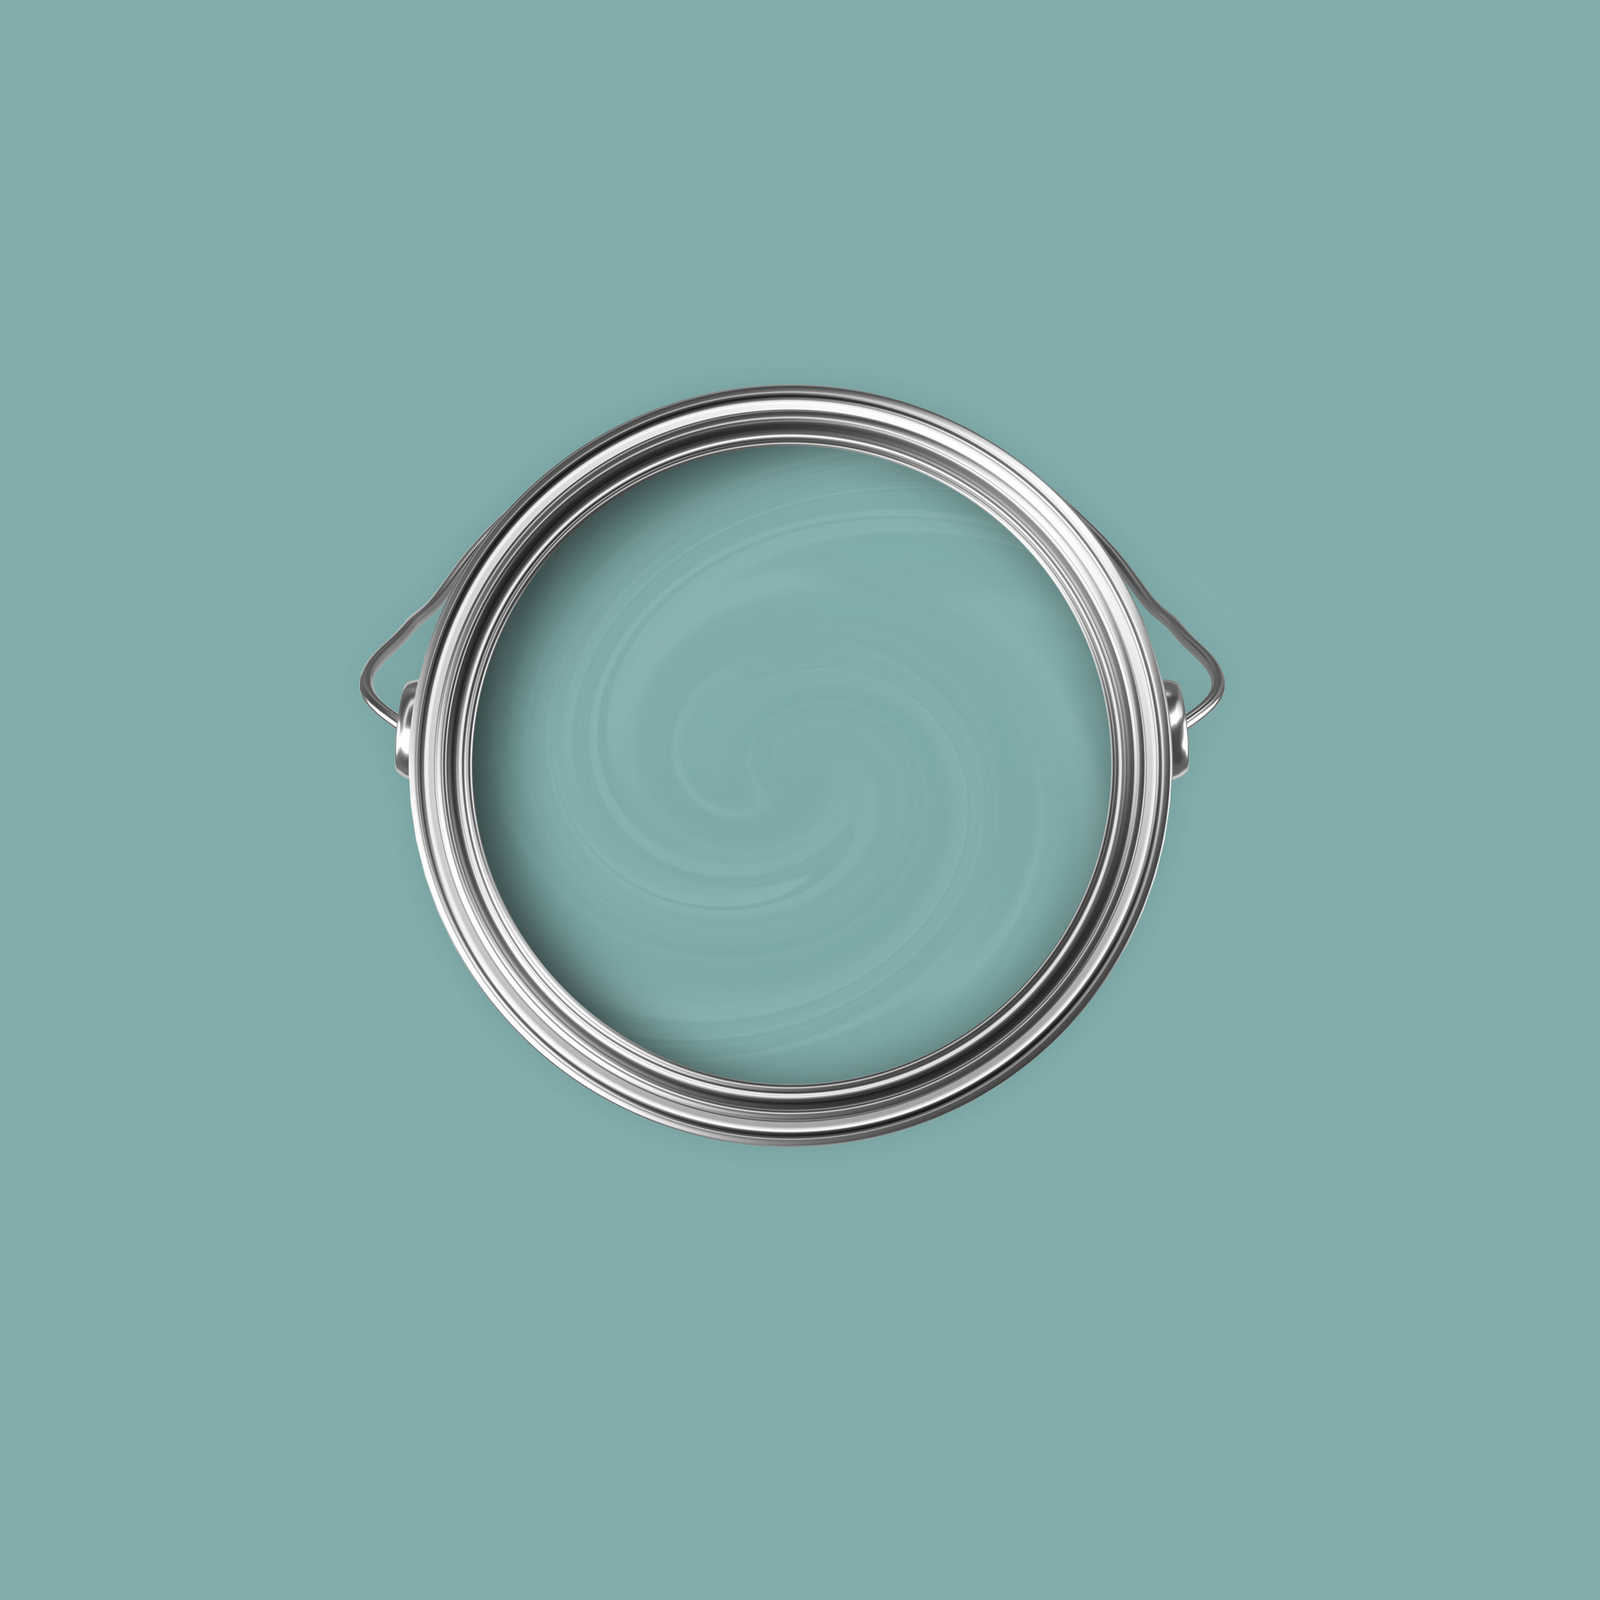             Premium Wandfarbe beflügelndes Mint »Expressive Emerald« NW408 – 2,5 Liter
        